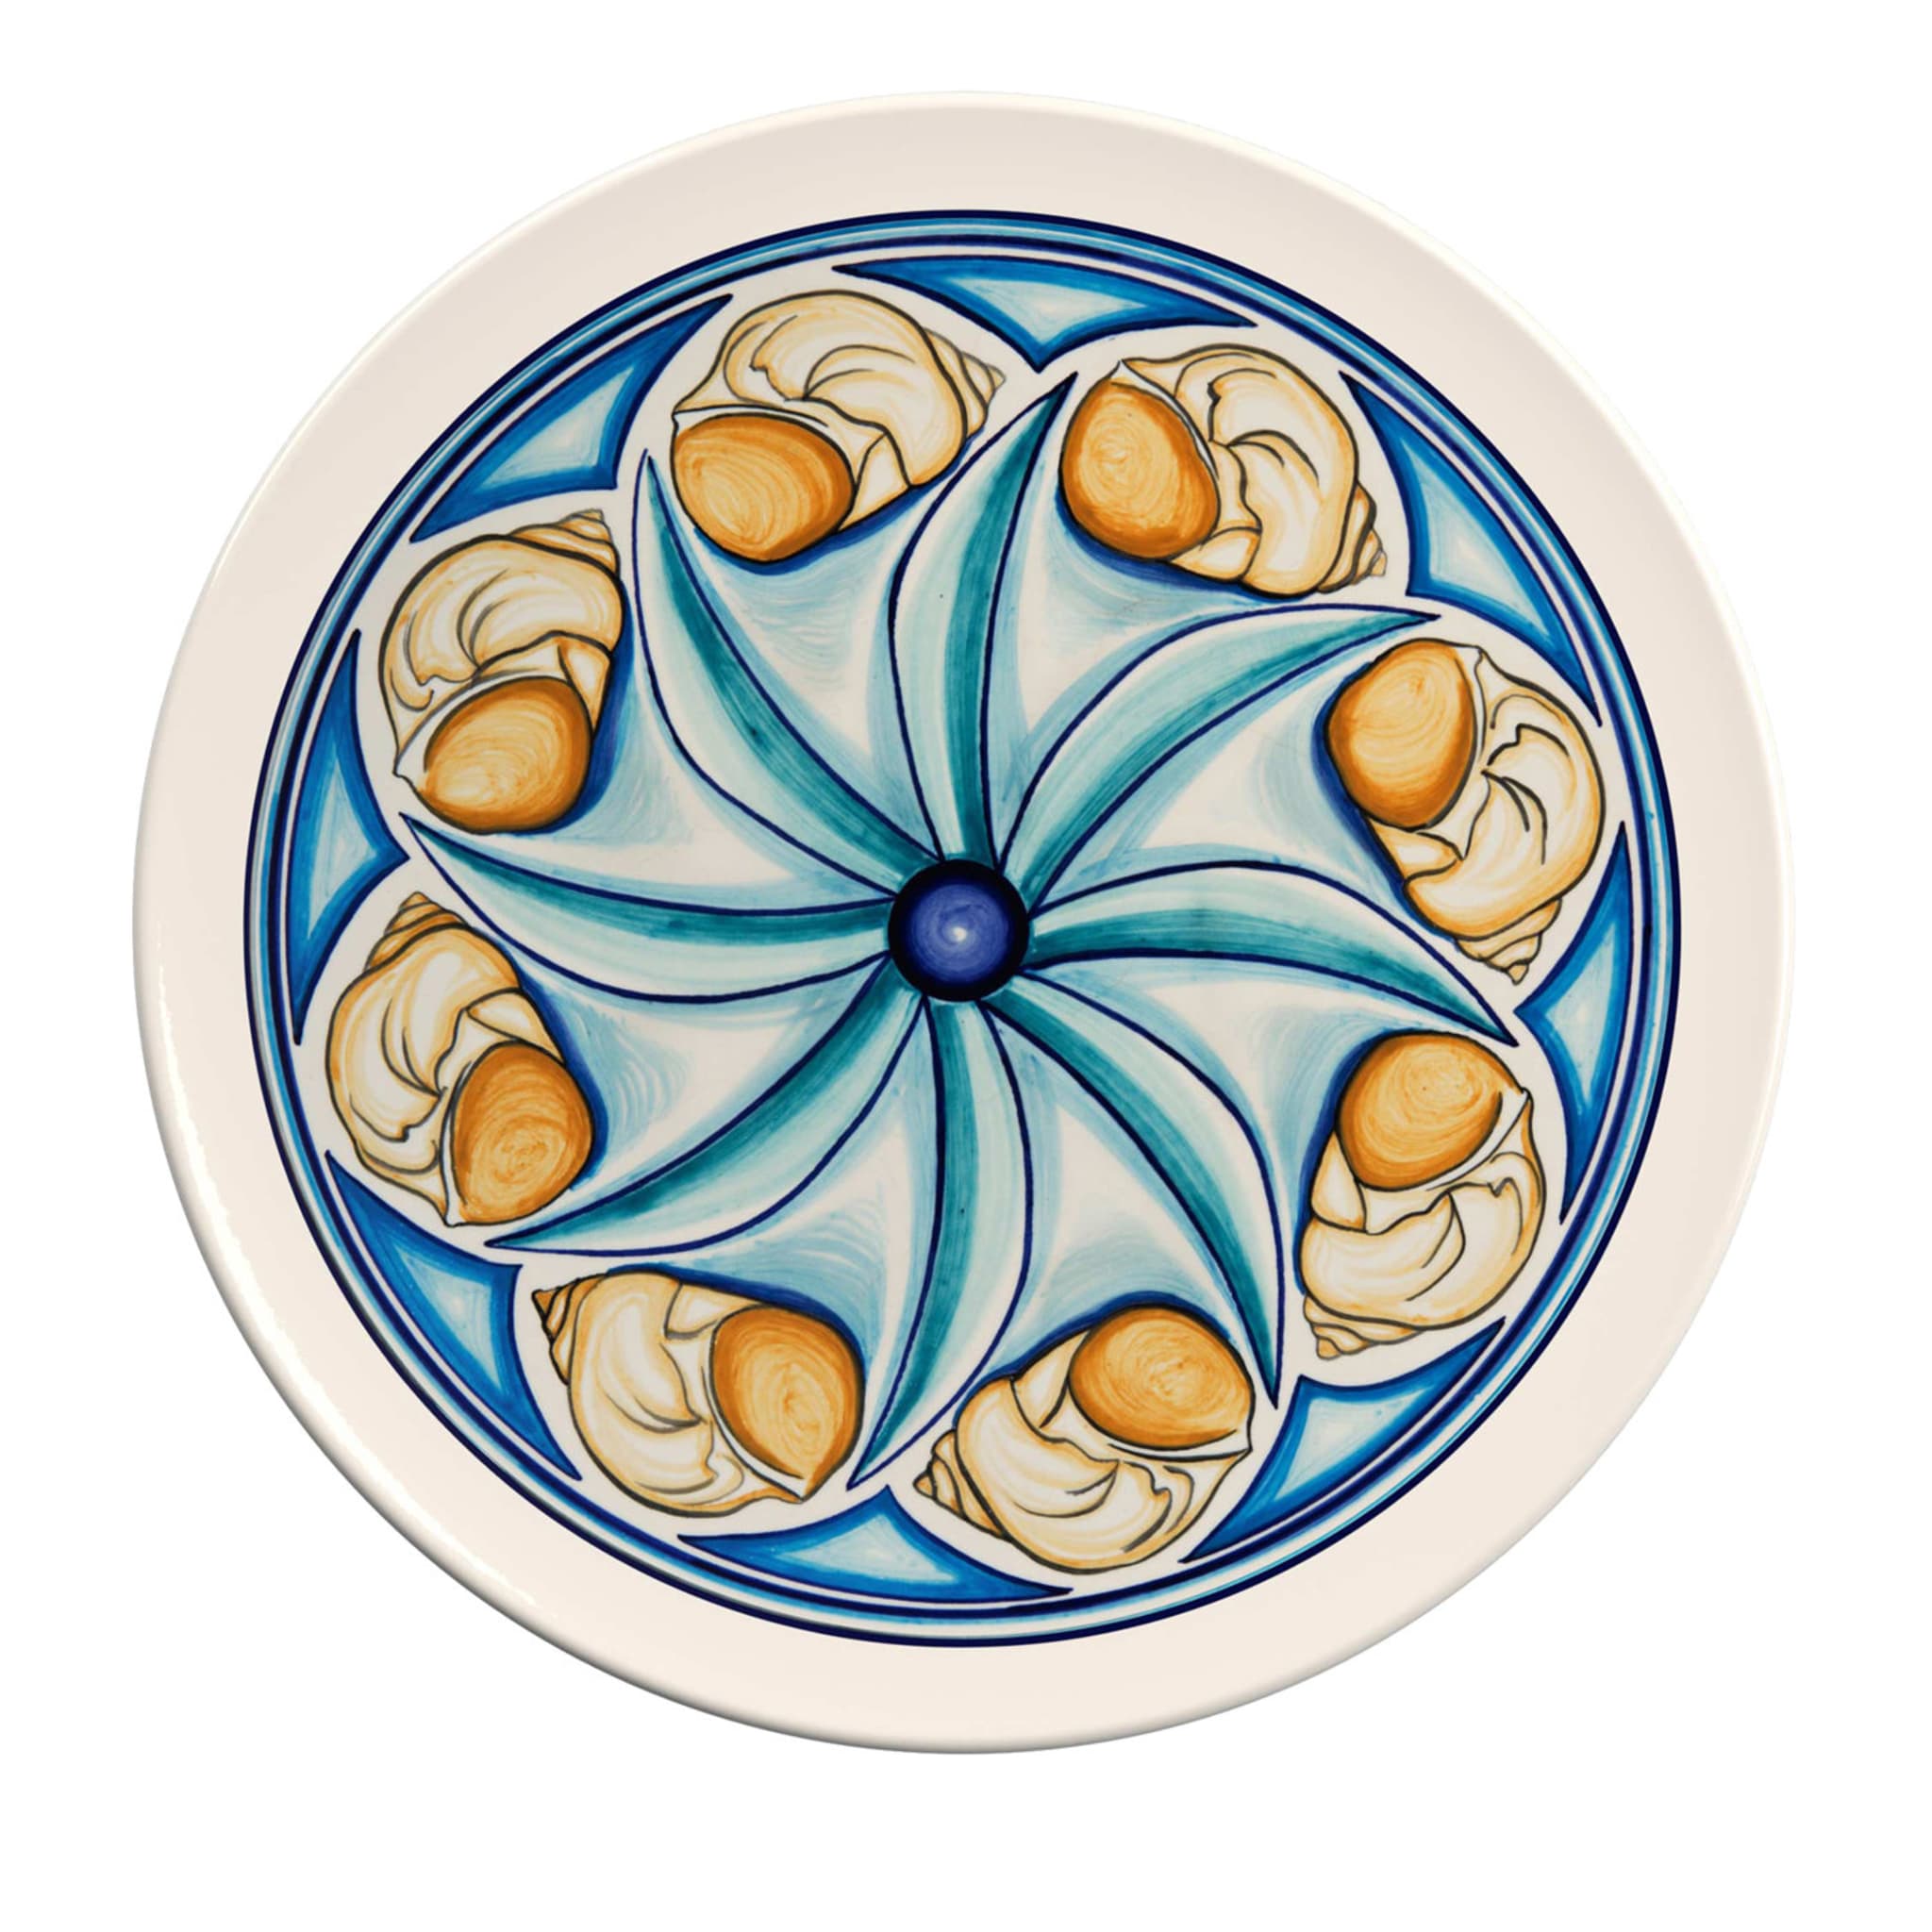 Colapesce Conchiglie Decorative Plate #3 - Main view